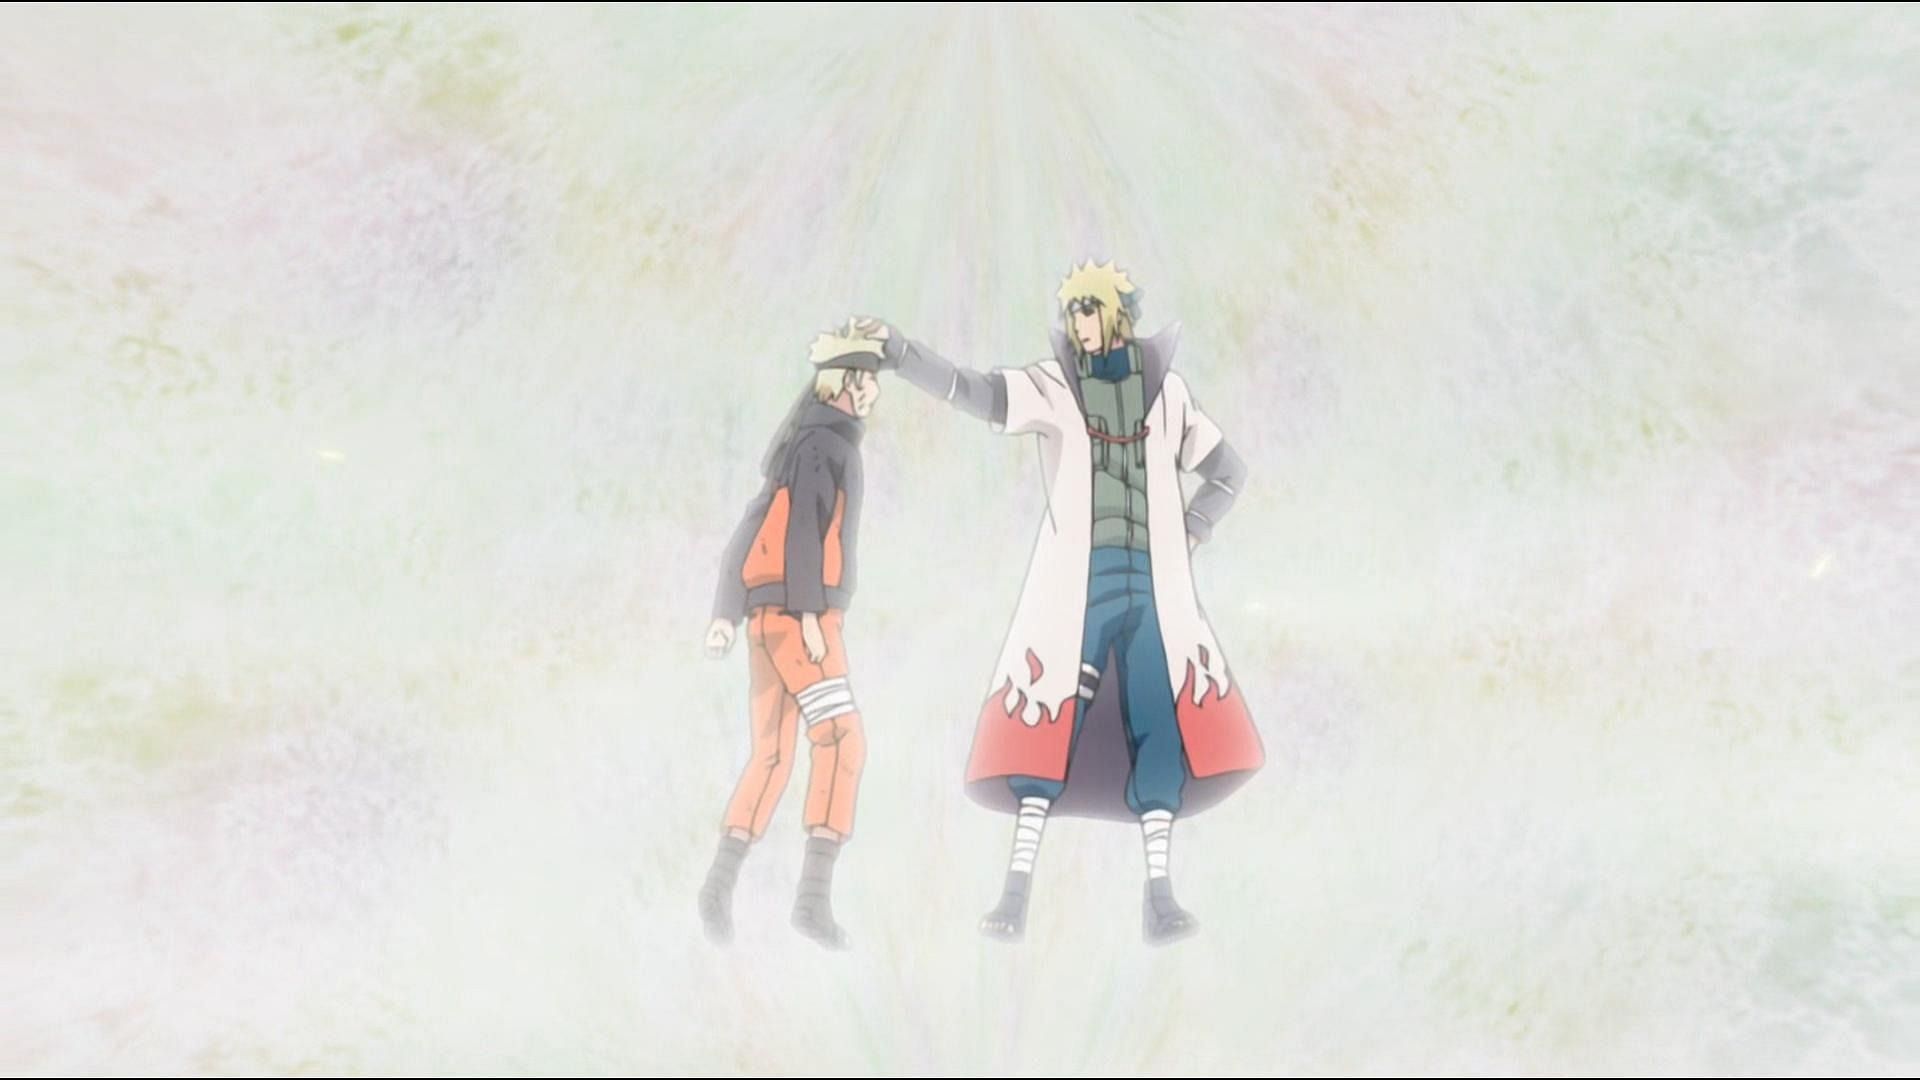 Naruto and Minato as seen in the Naruto anime (Image via Studio Pierrot)